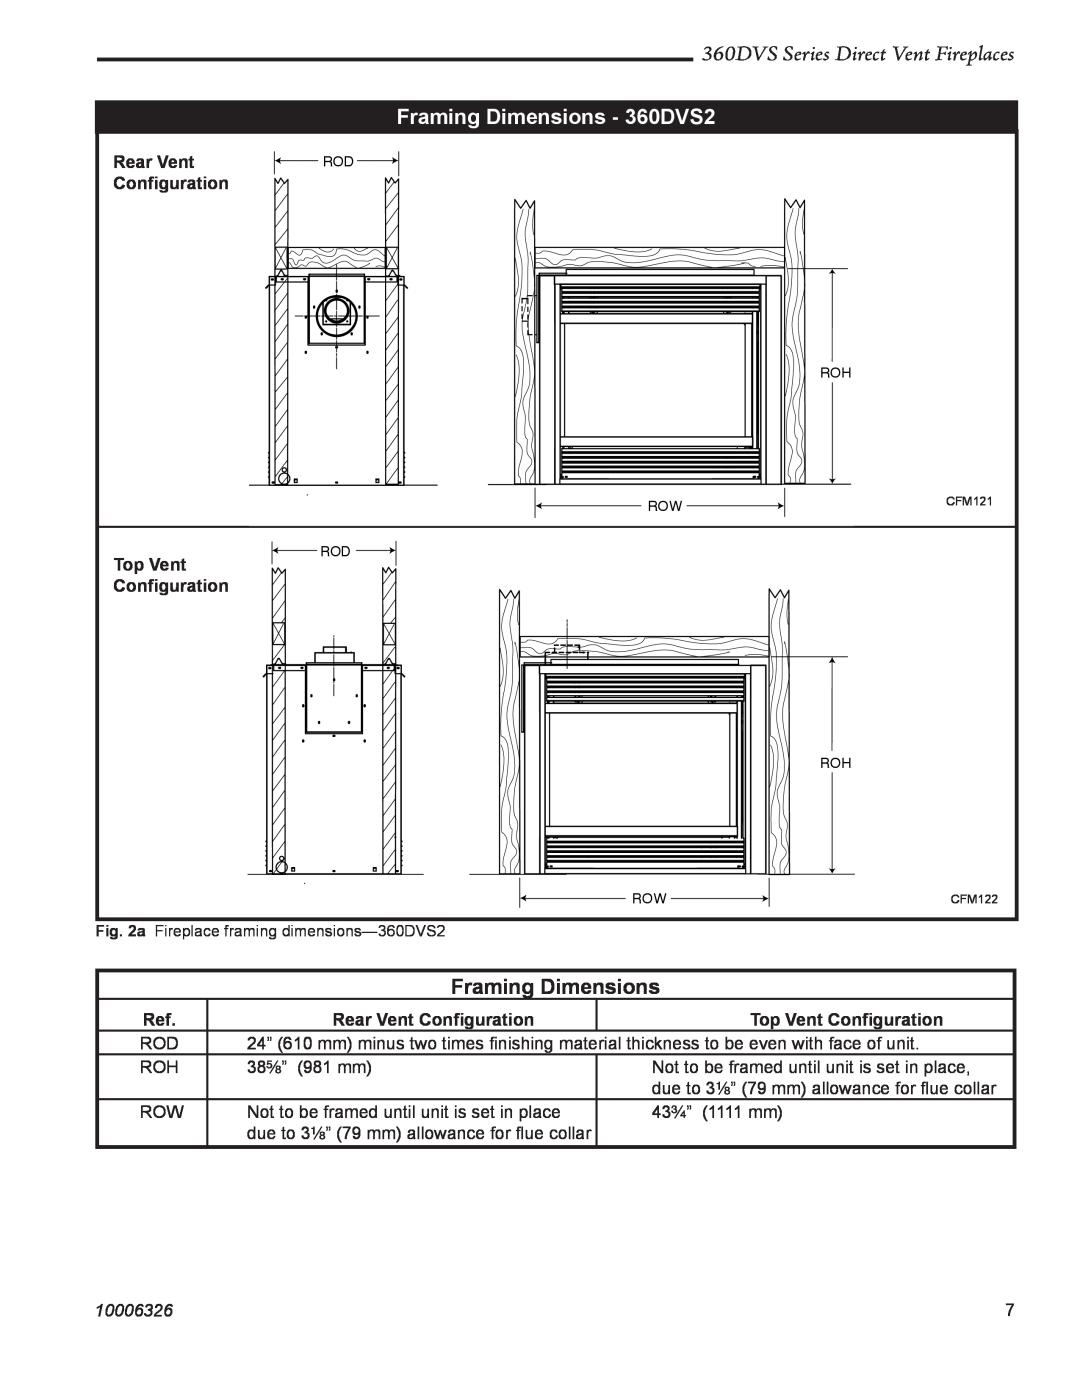 Majestic Appliances warranty Framing Dimensions - 360DVS2, 360DVS Series Direct Vent Fireplaces, Rear Vent, Conﬁguration 